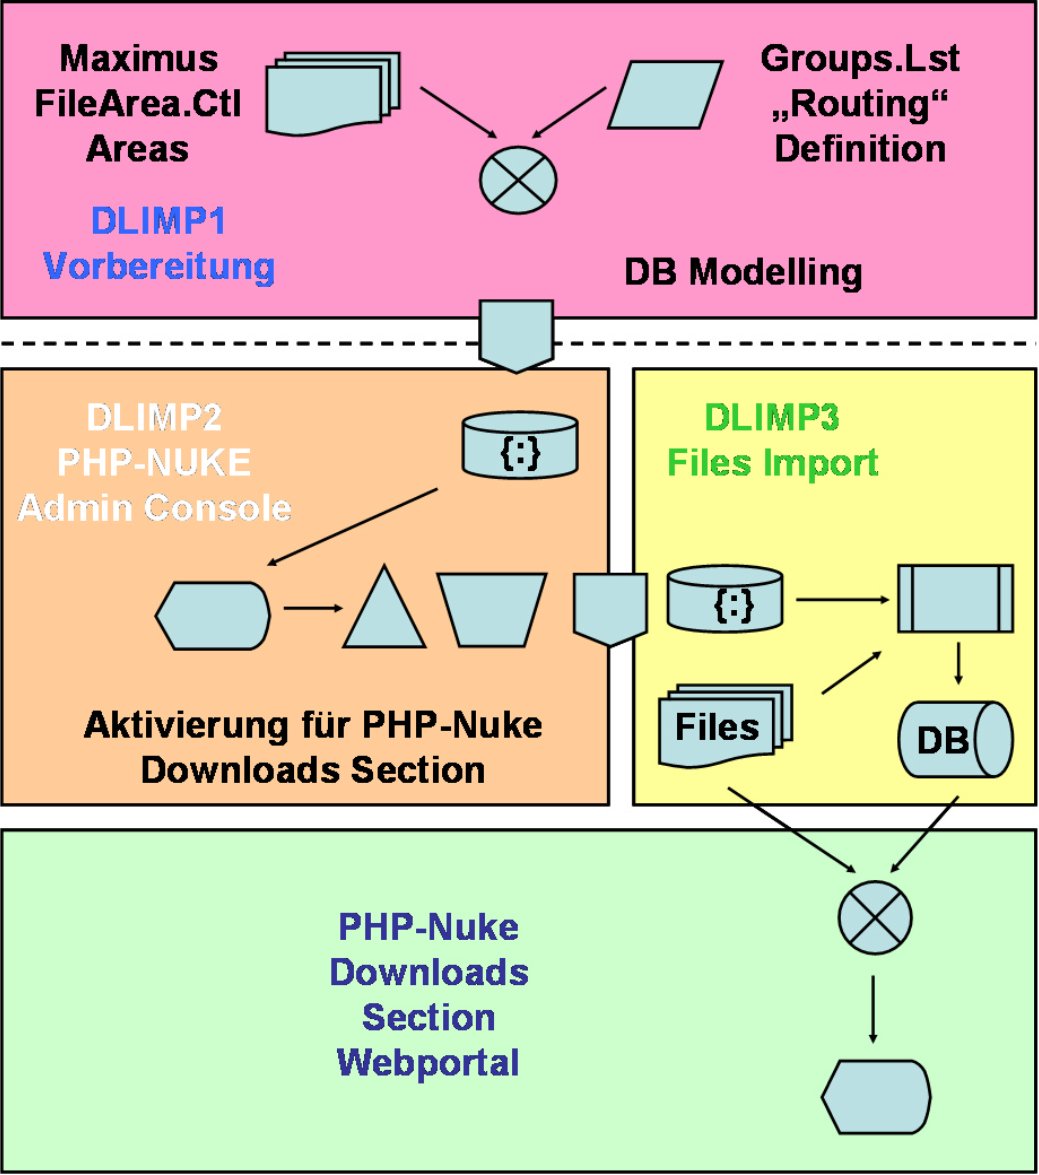 DLIMP Modelling